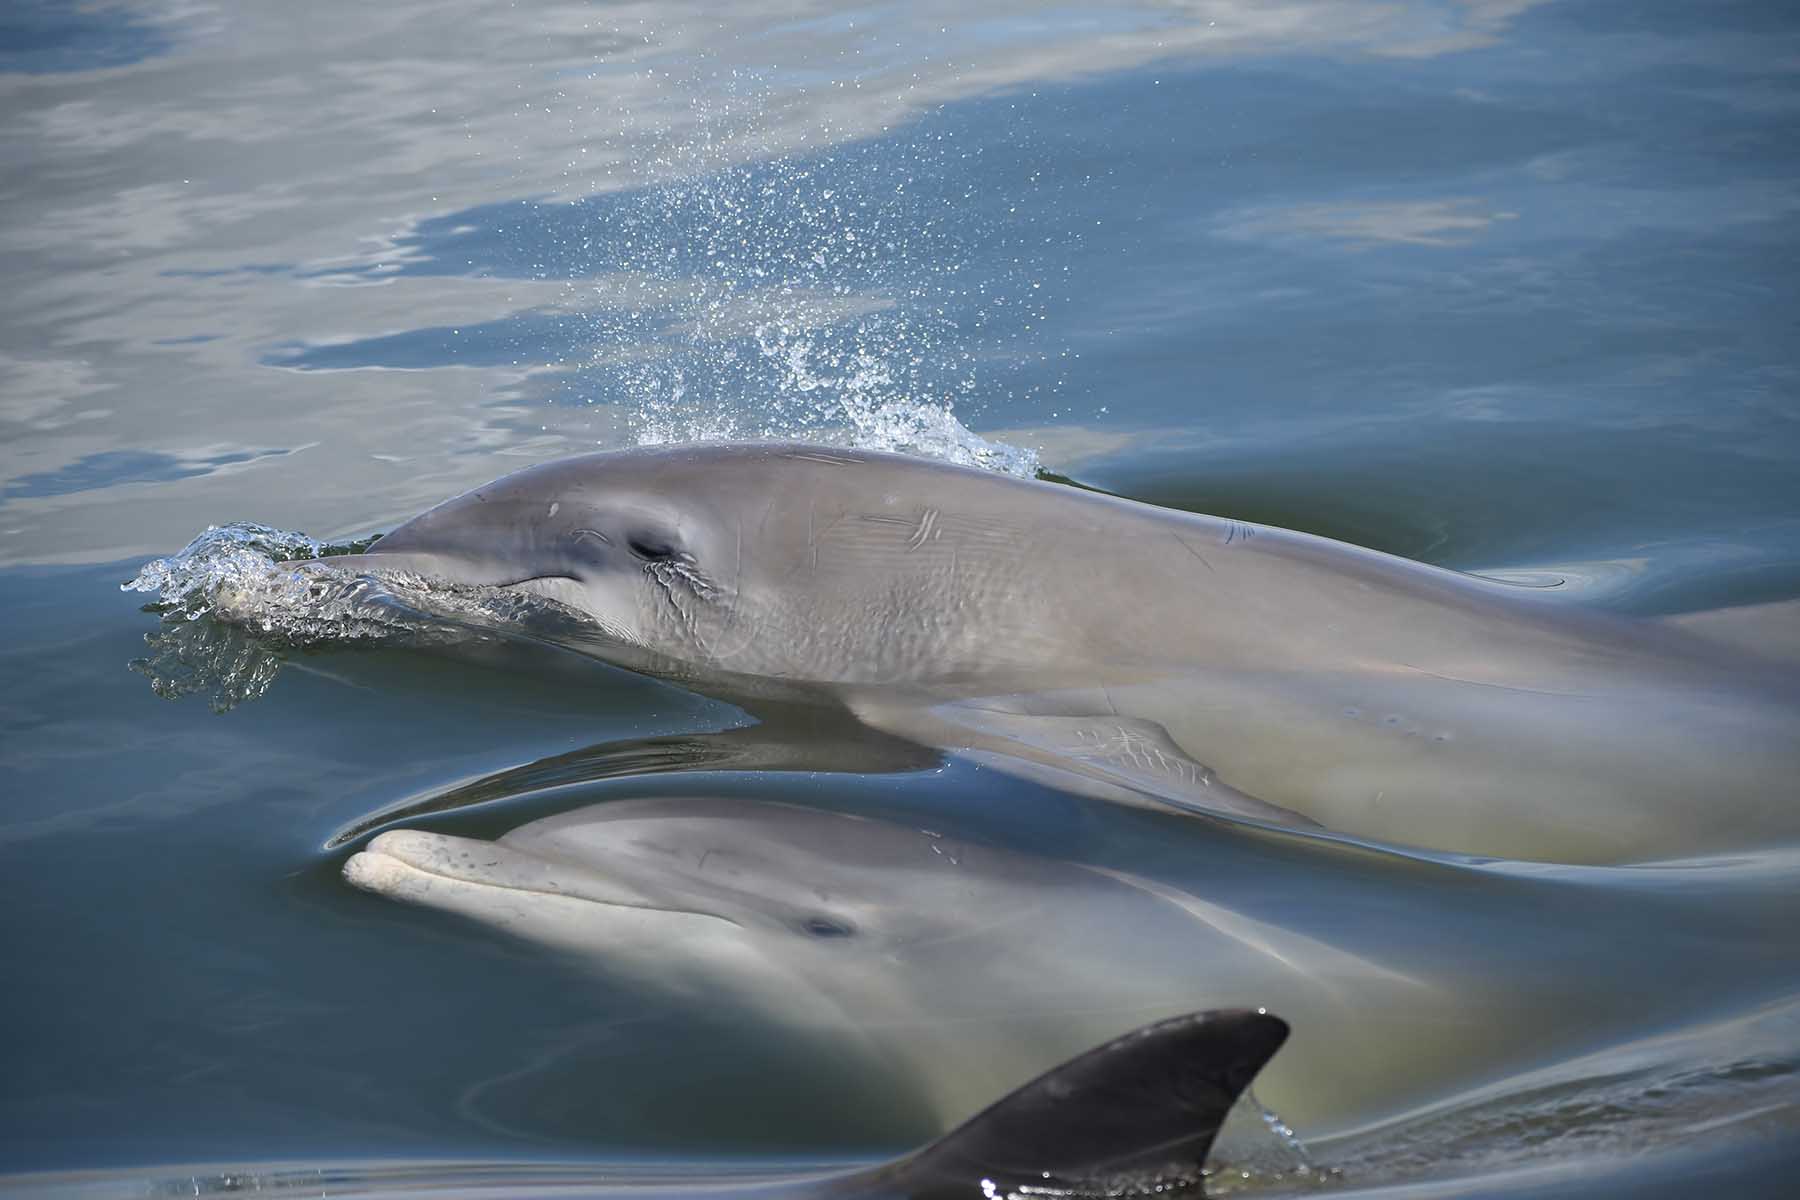 Exploring Microbiomes Sarasota Dolphin Research Program